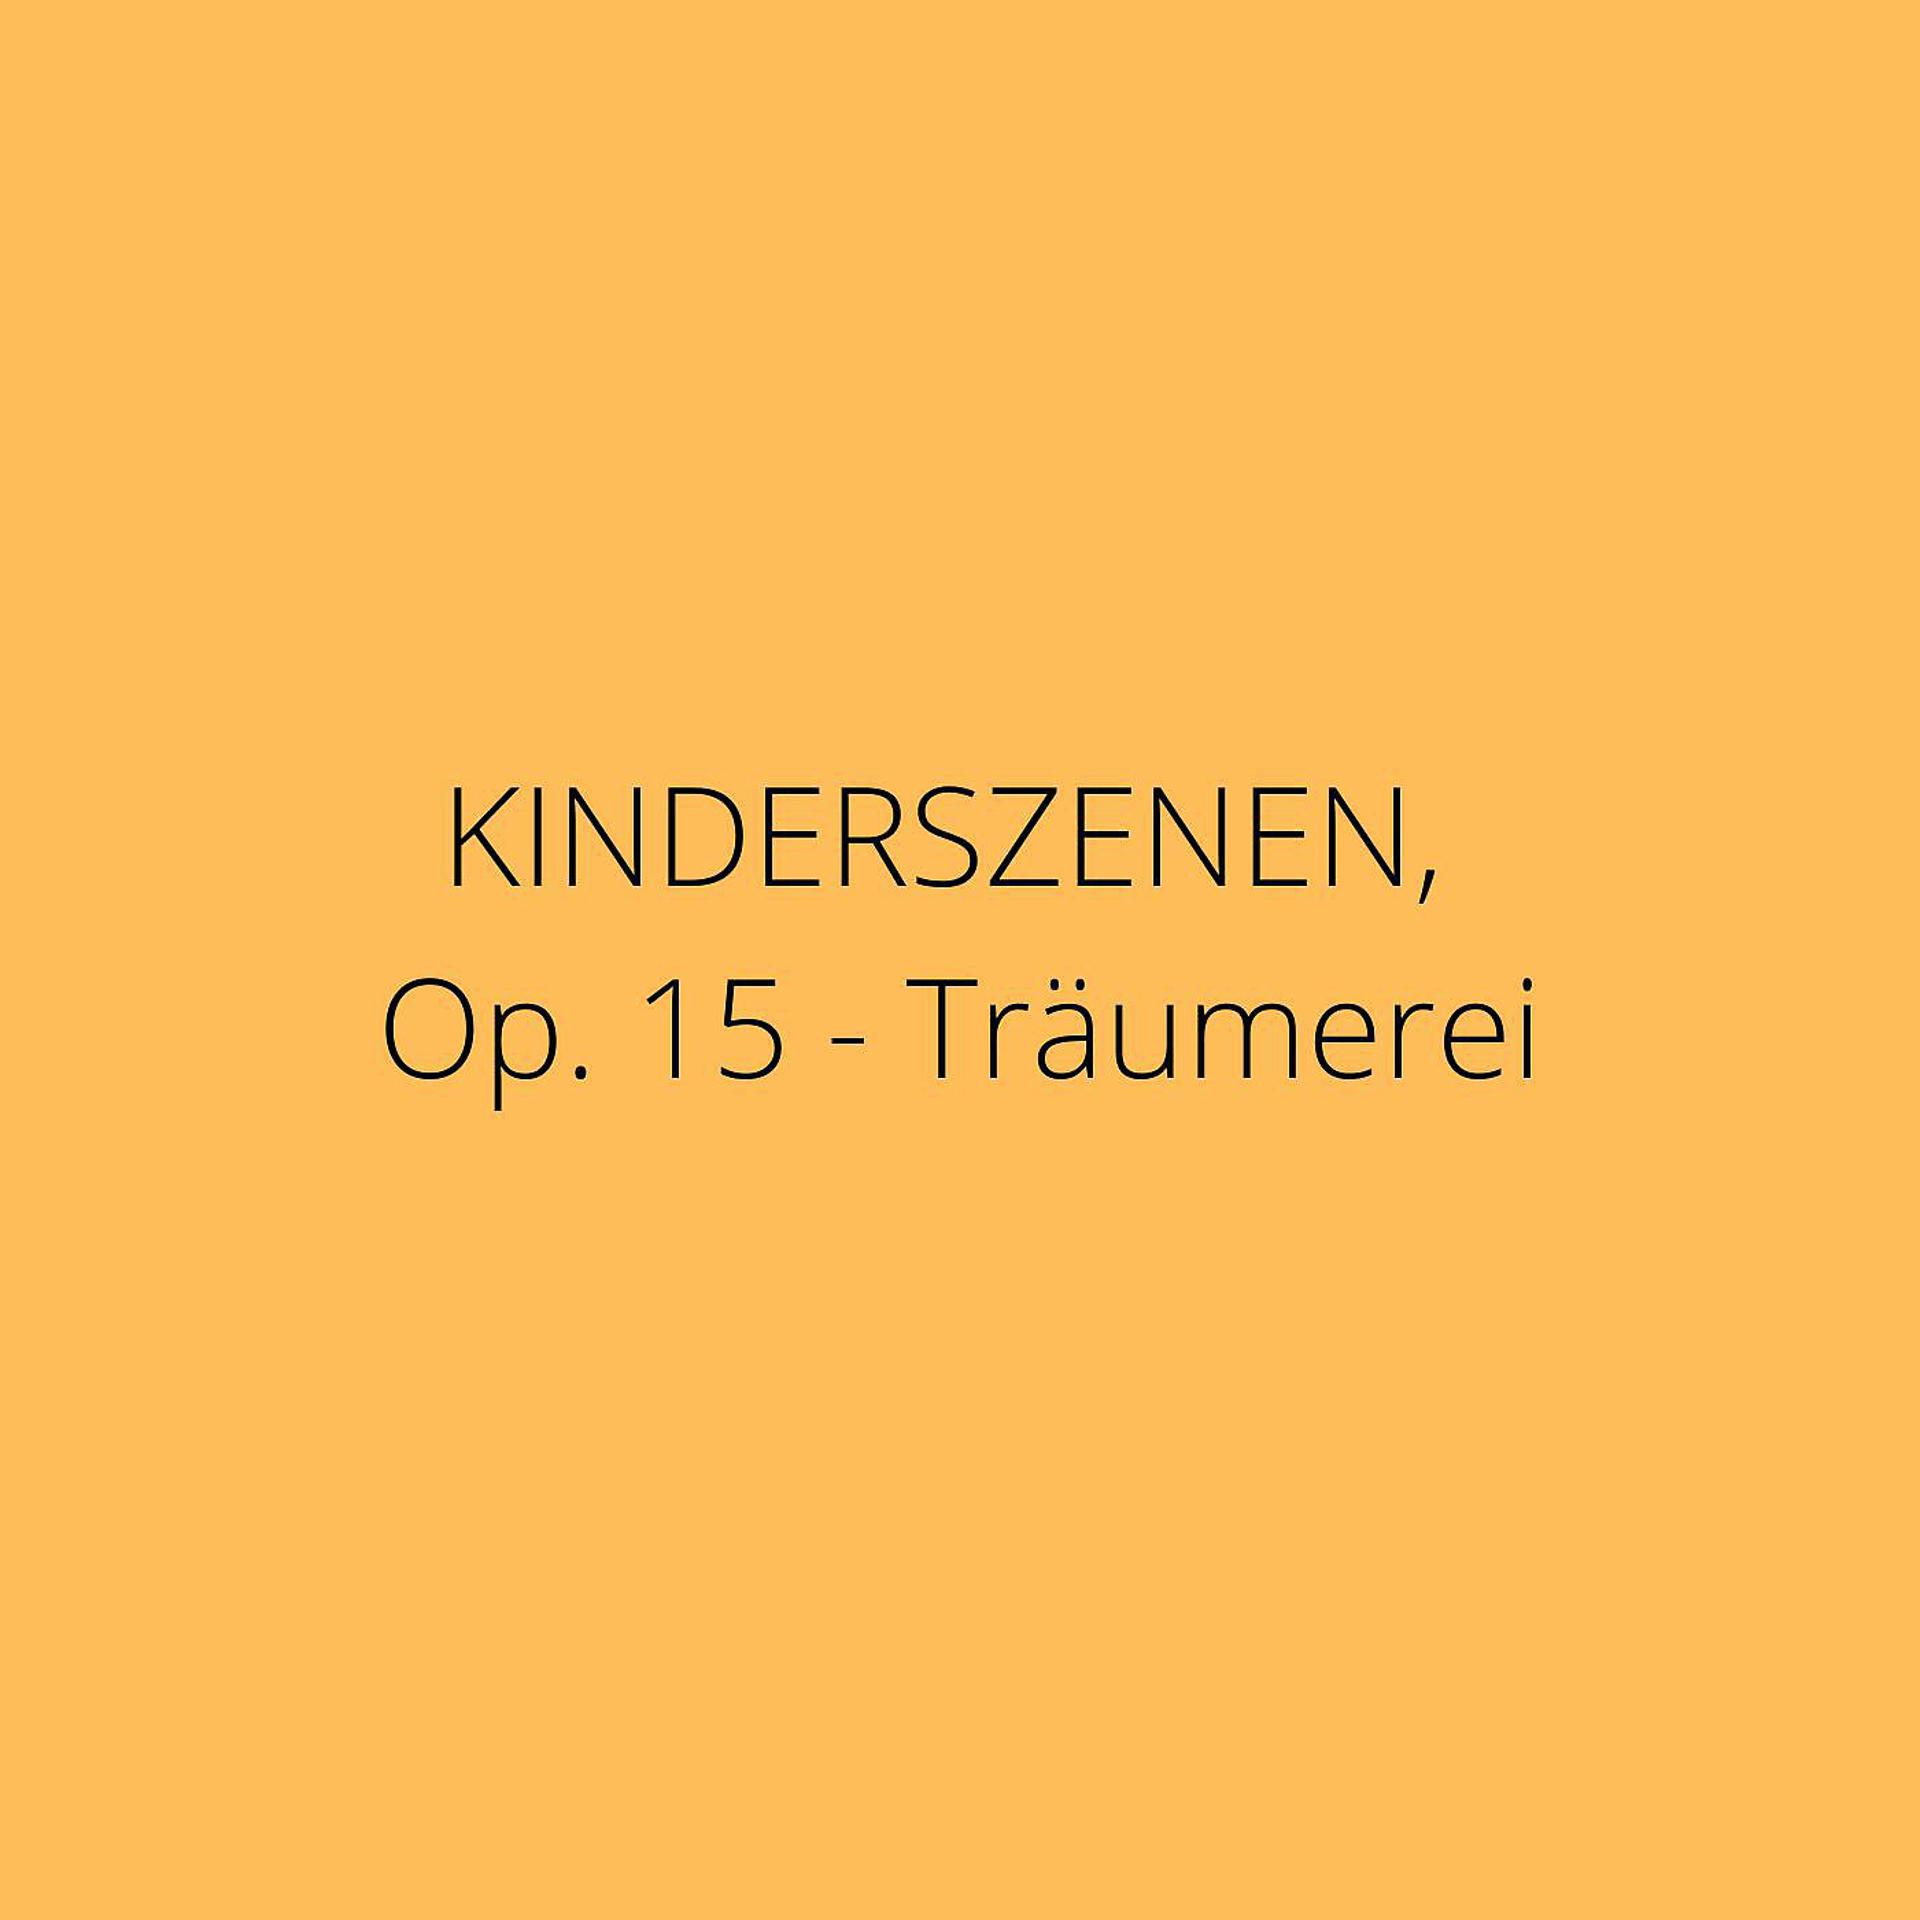 Постер альбома Kinderszenen, Op. 15: No. 7, Träumerei